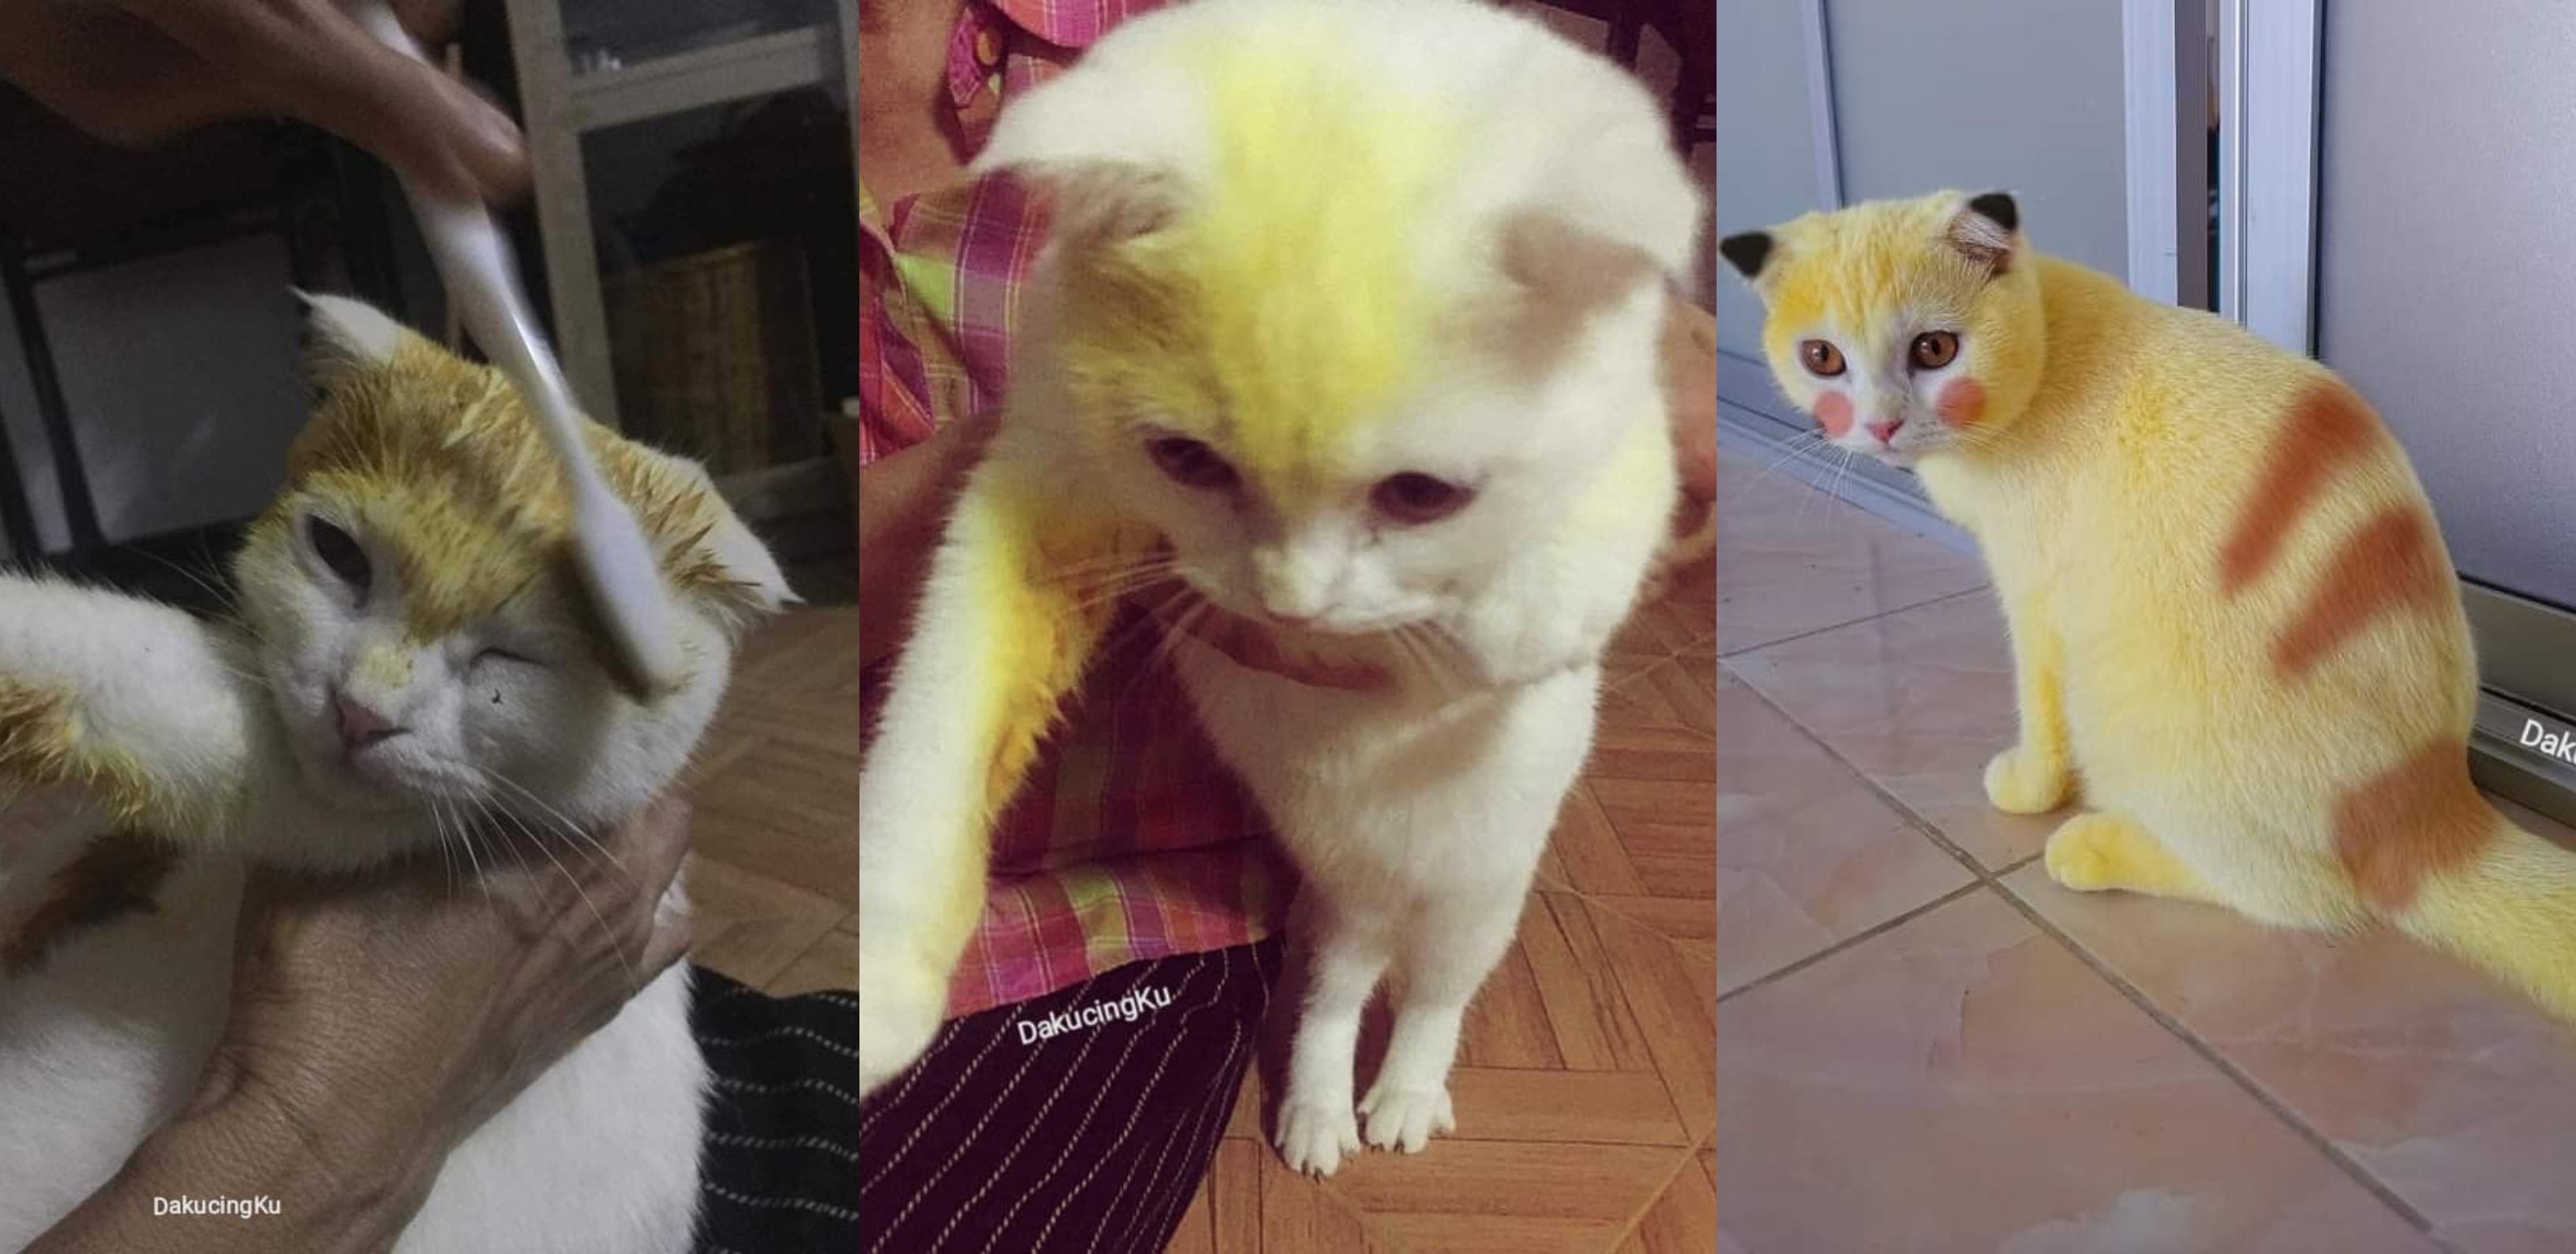  Kucing  Kena Lumur Kunyit  Macam Pikachu 